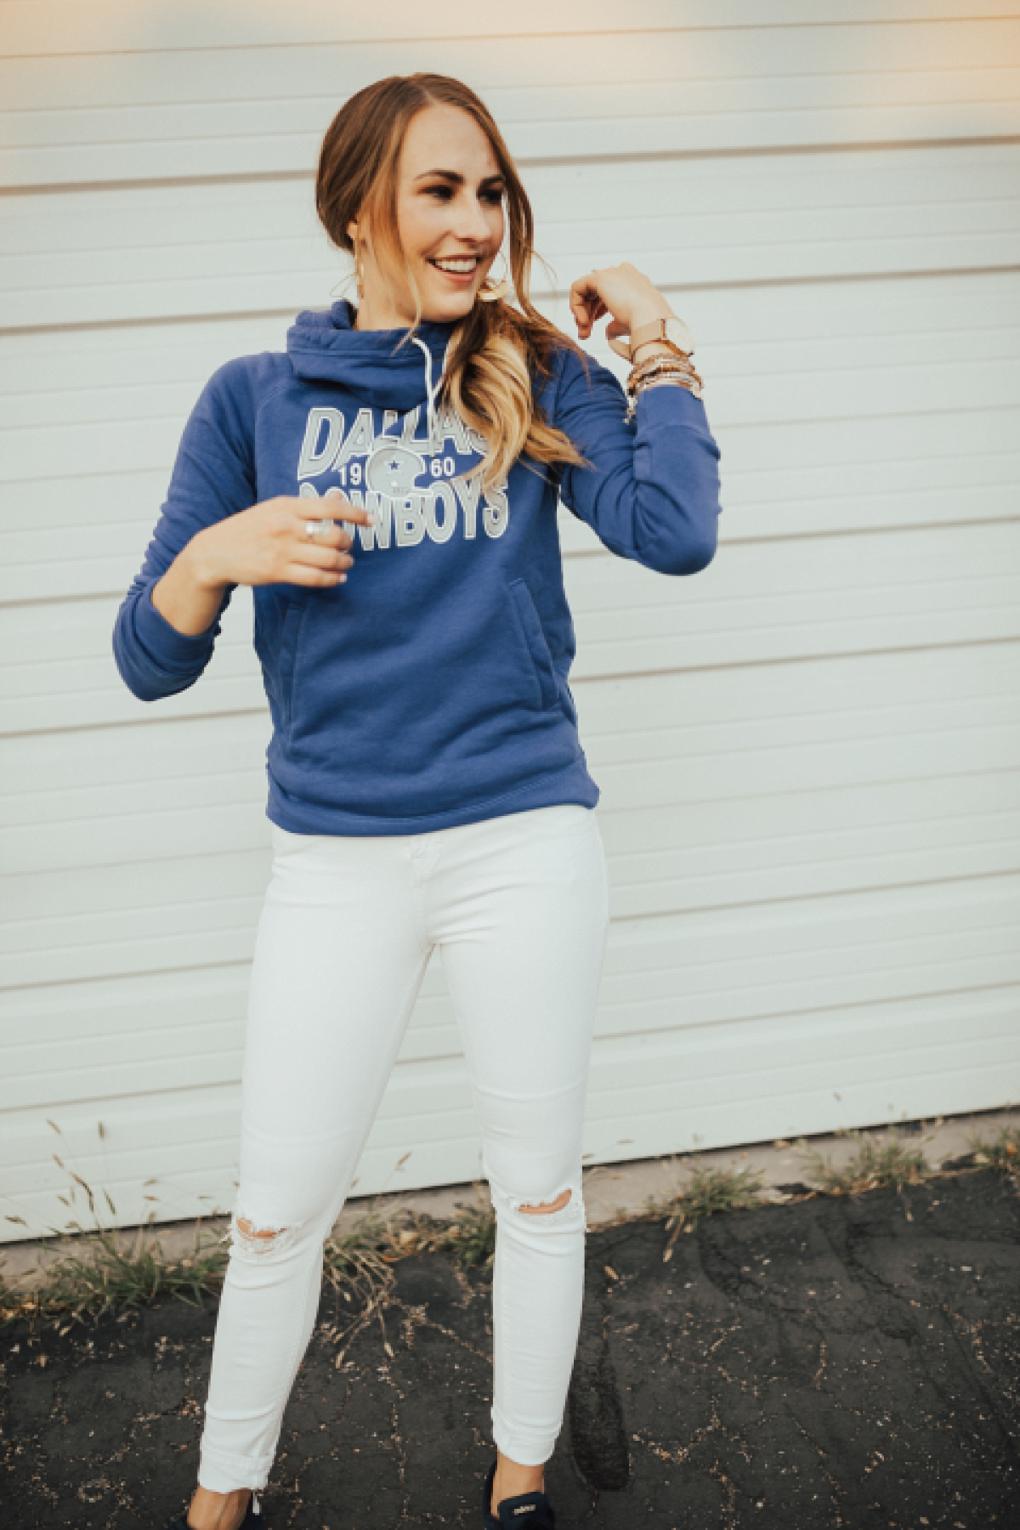 Dallas Cowboys Sweater: Staying Cozy for Football Season by Utah fashion blogger Dani Marie